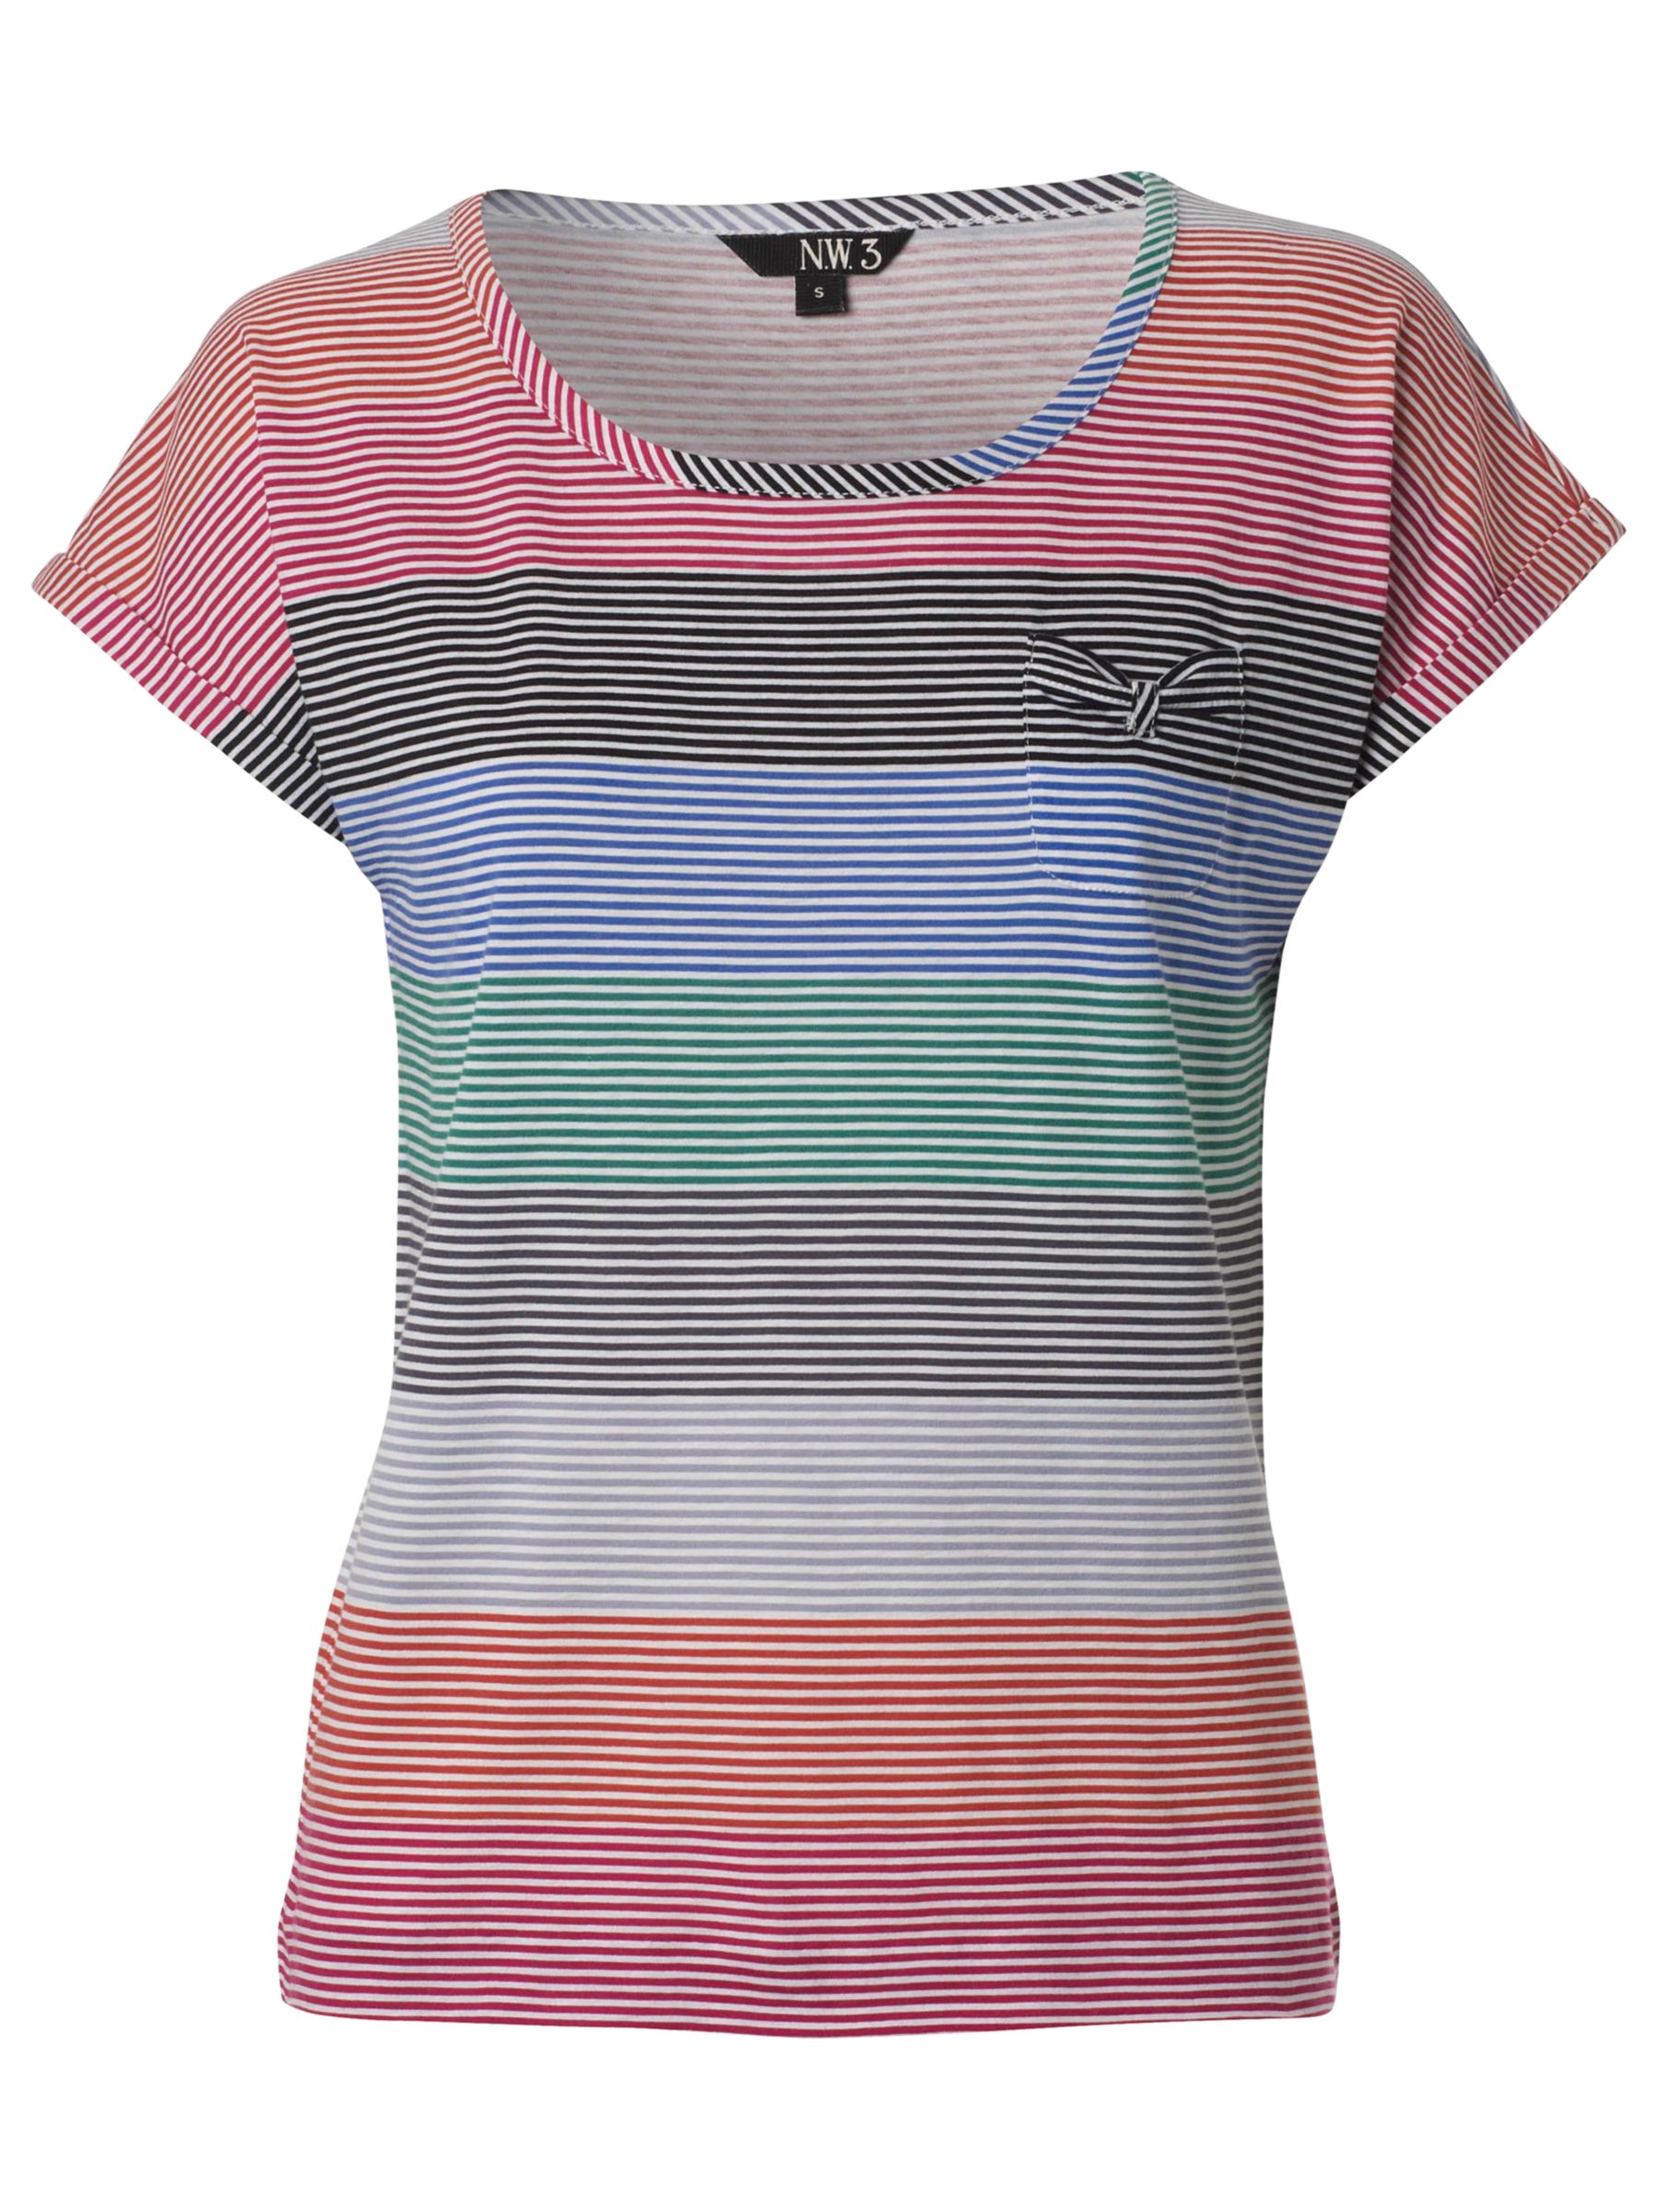 NW3 Ticking Stripe T-Shirt, Chalk